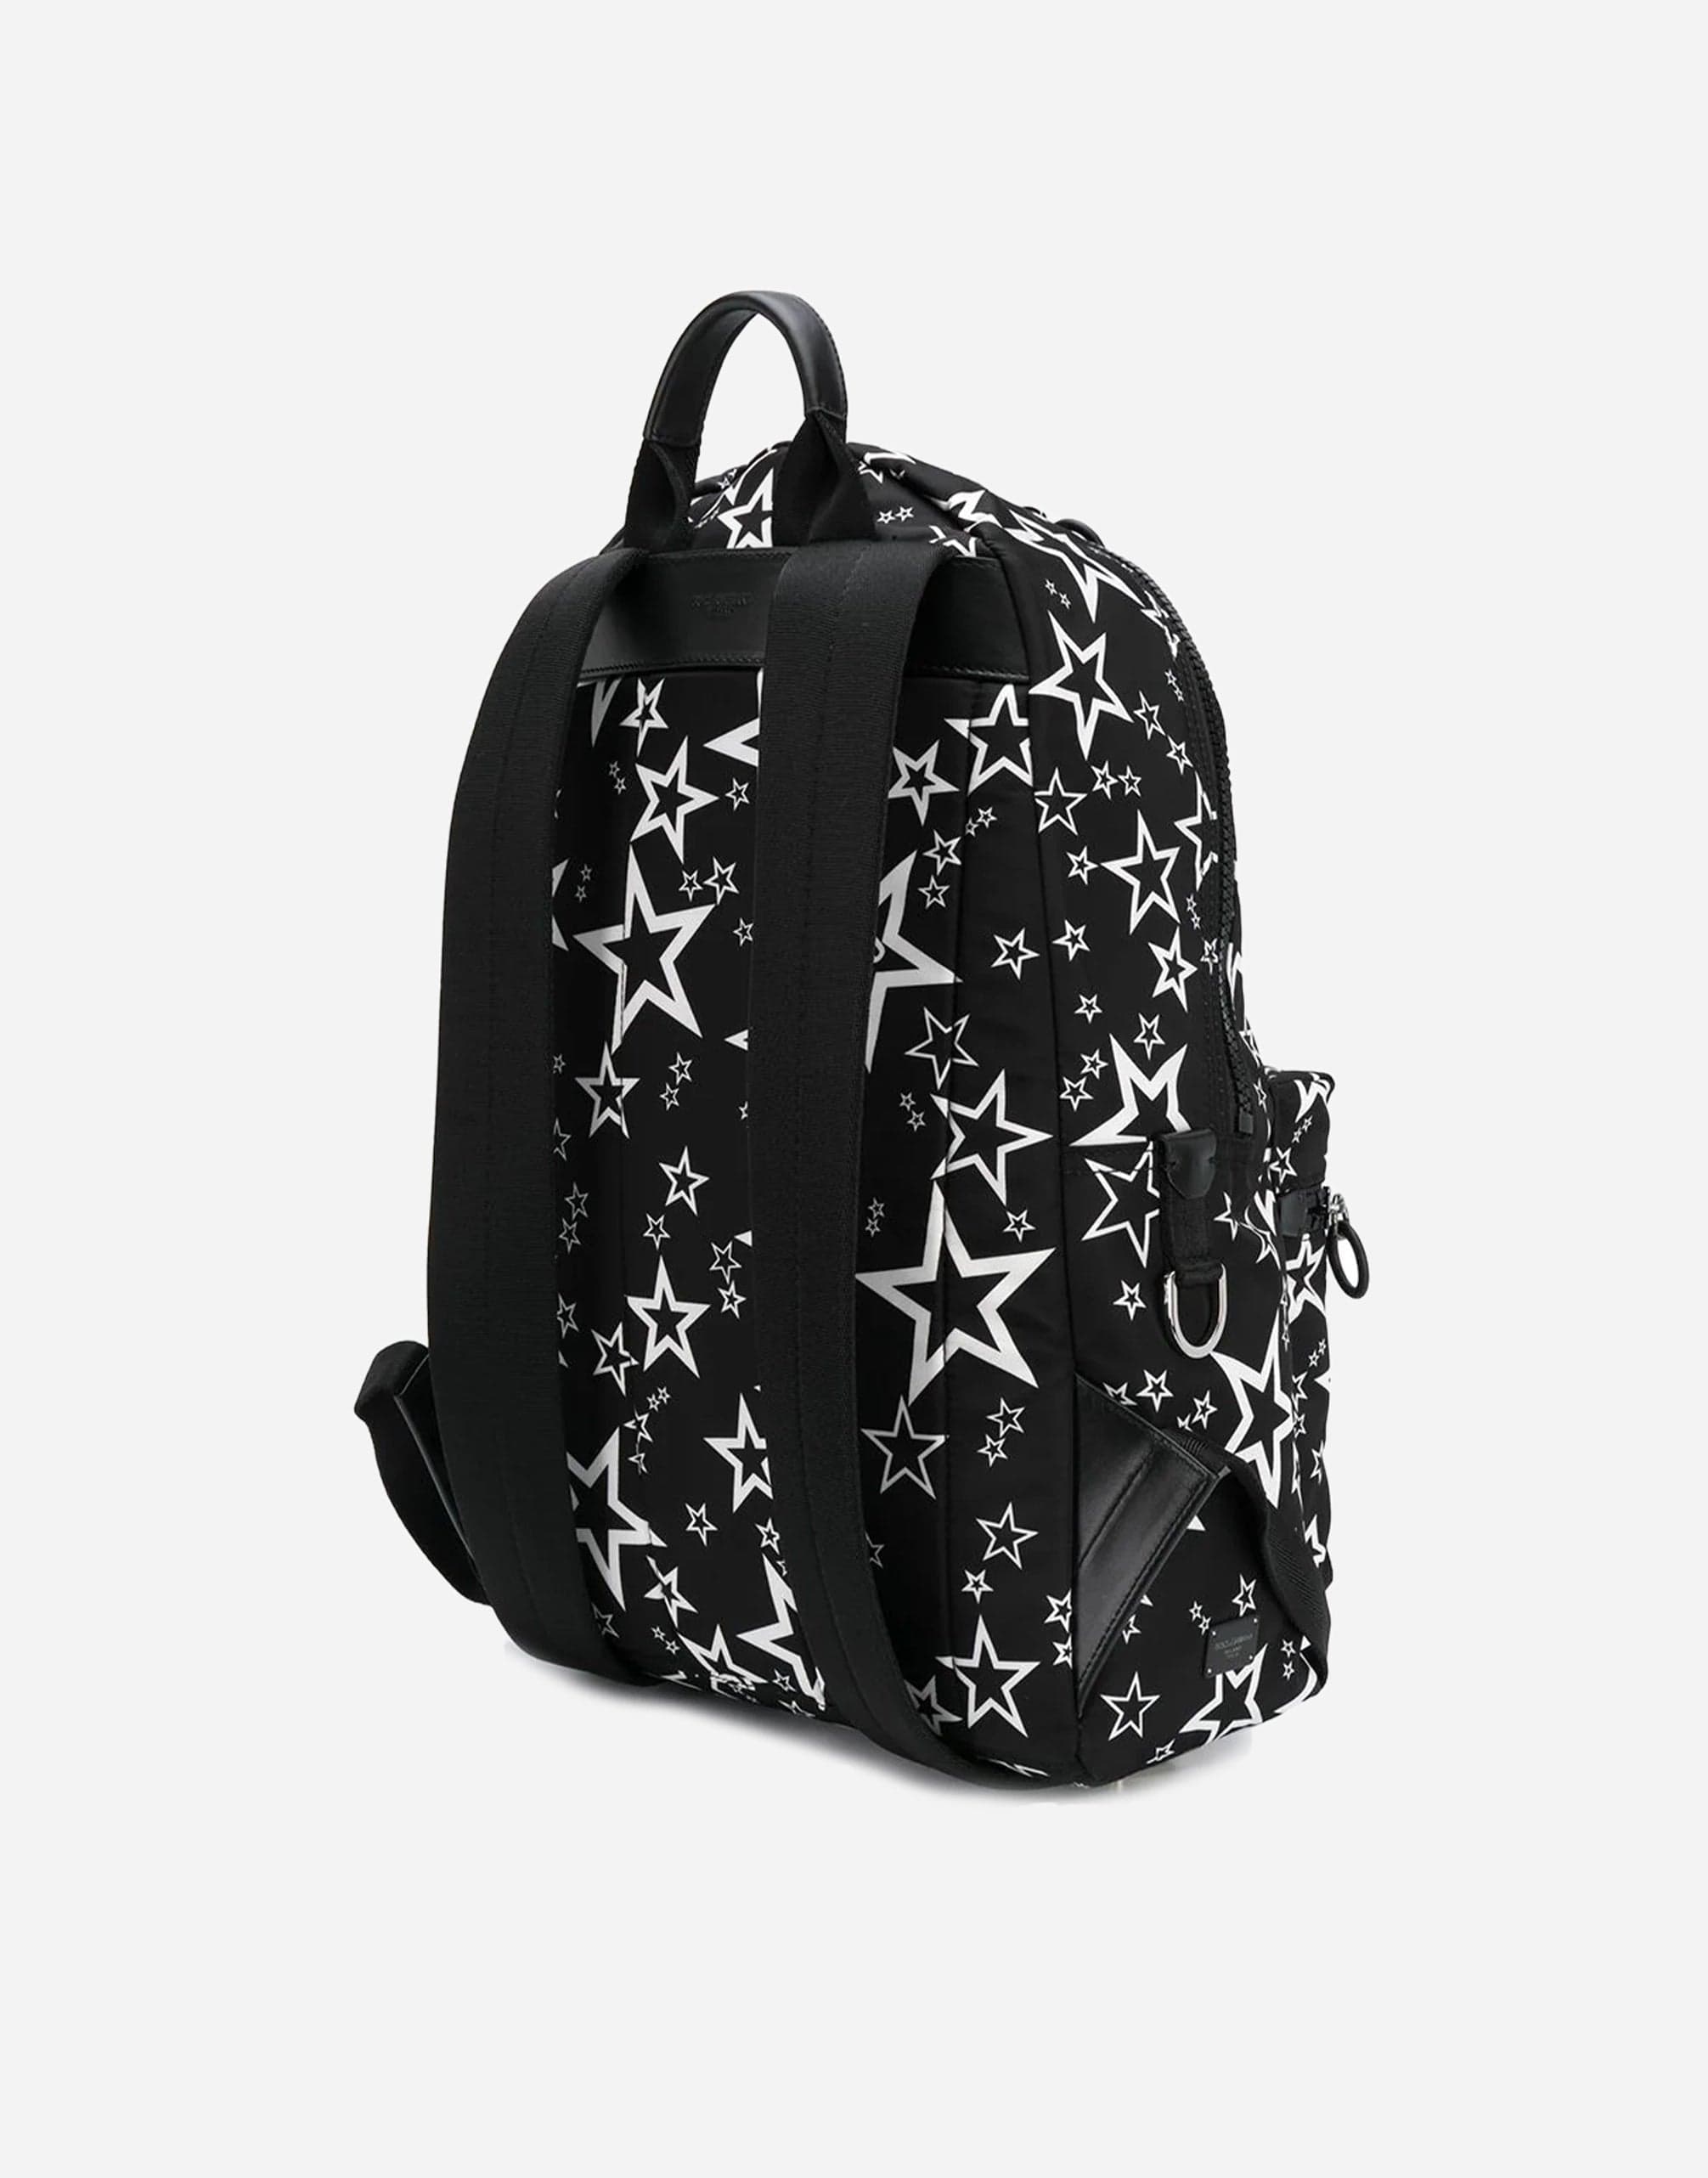 Dolce & Gabbana star print backpack